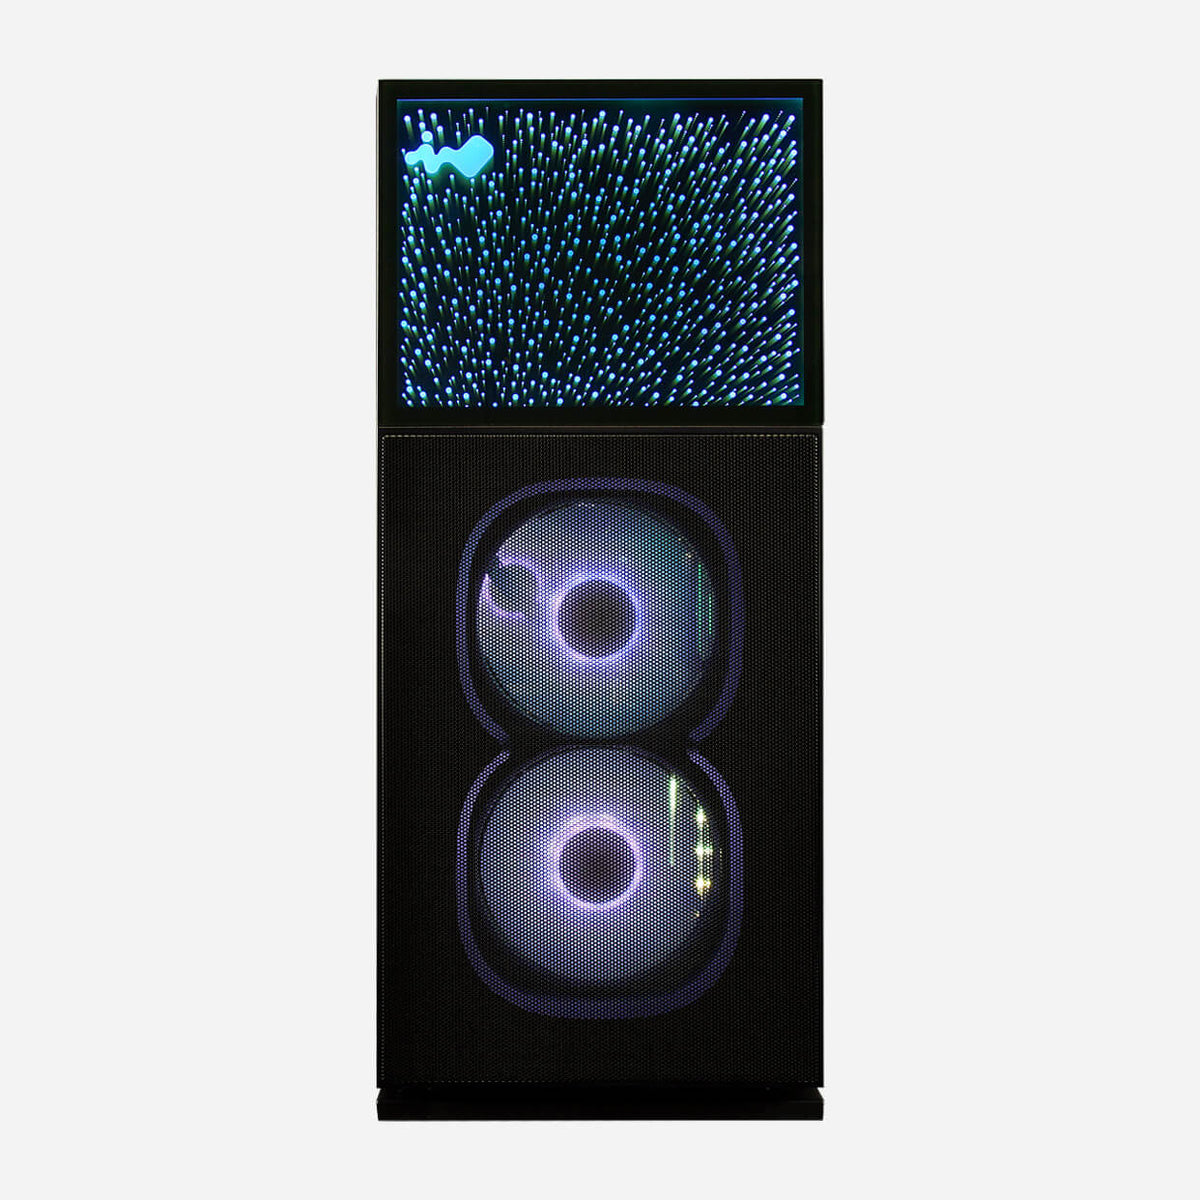 N515 Nebula Ultra Cooling Edition